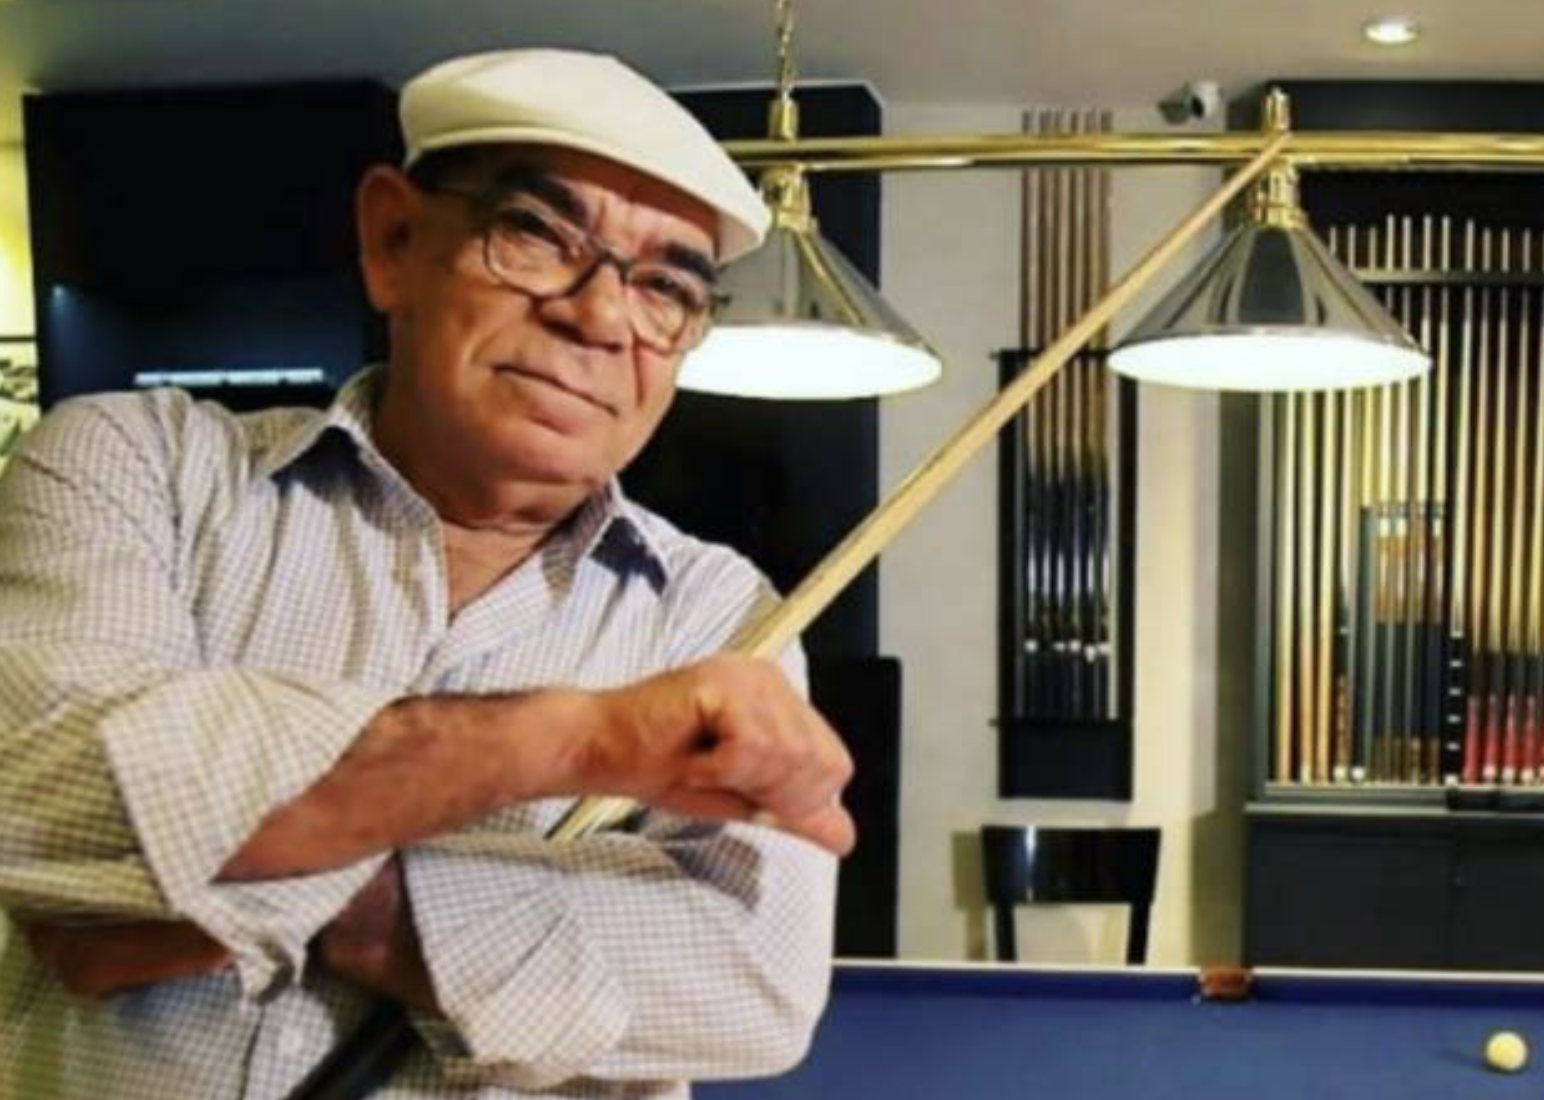 Morre Rui Chapéu, 80 anos, o maior jogador de sinuca do Brasil